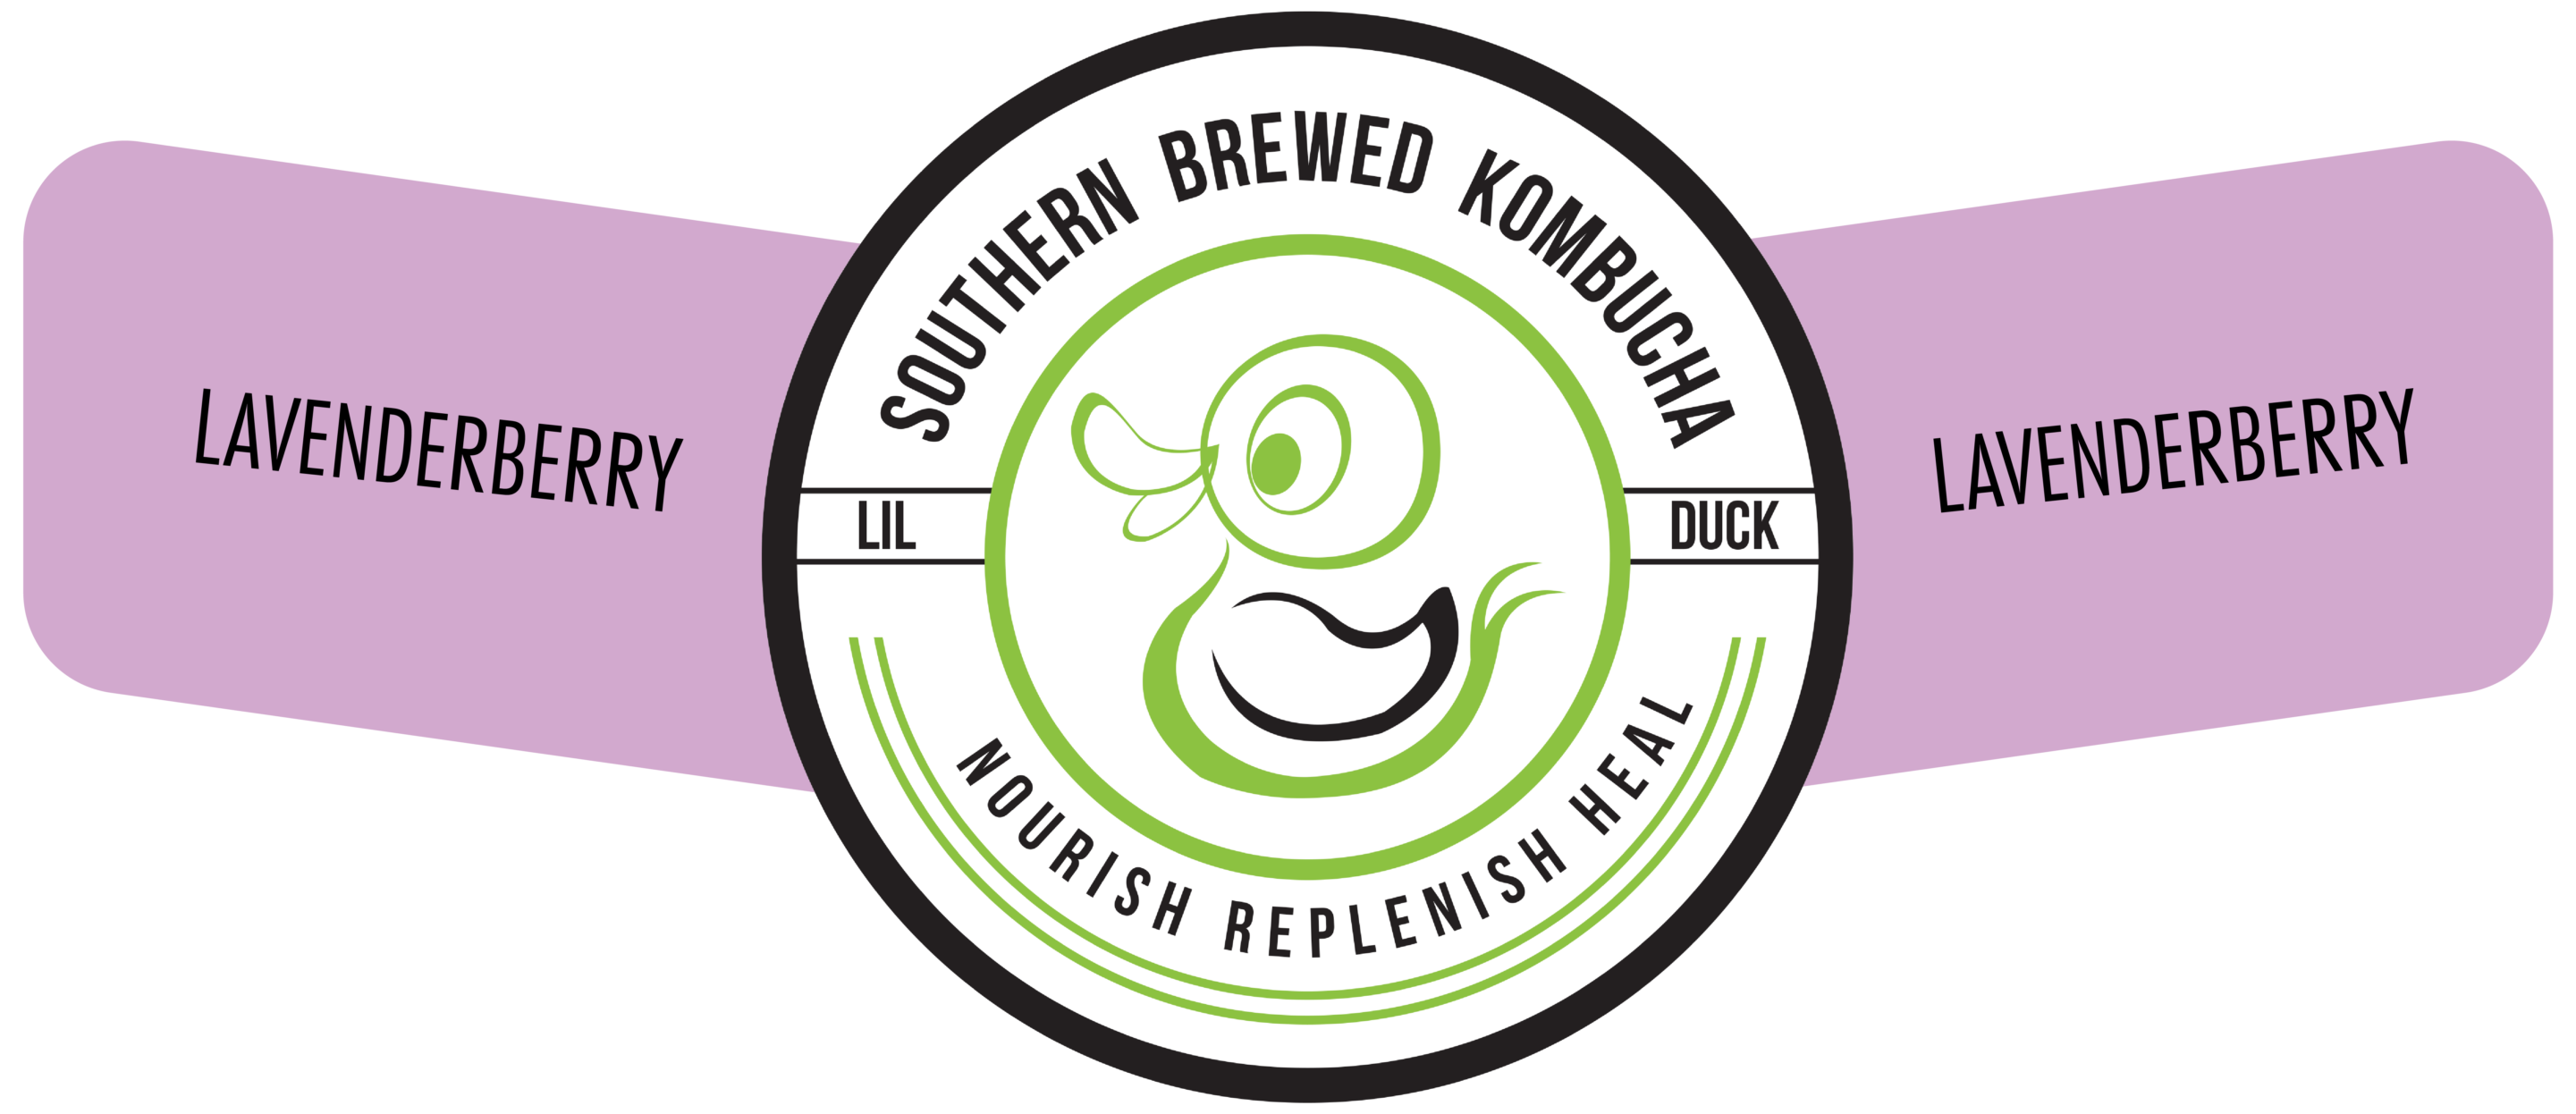 lavenderberry bottle label lil duck kombucha